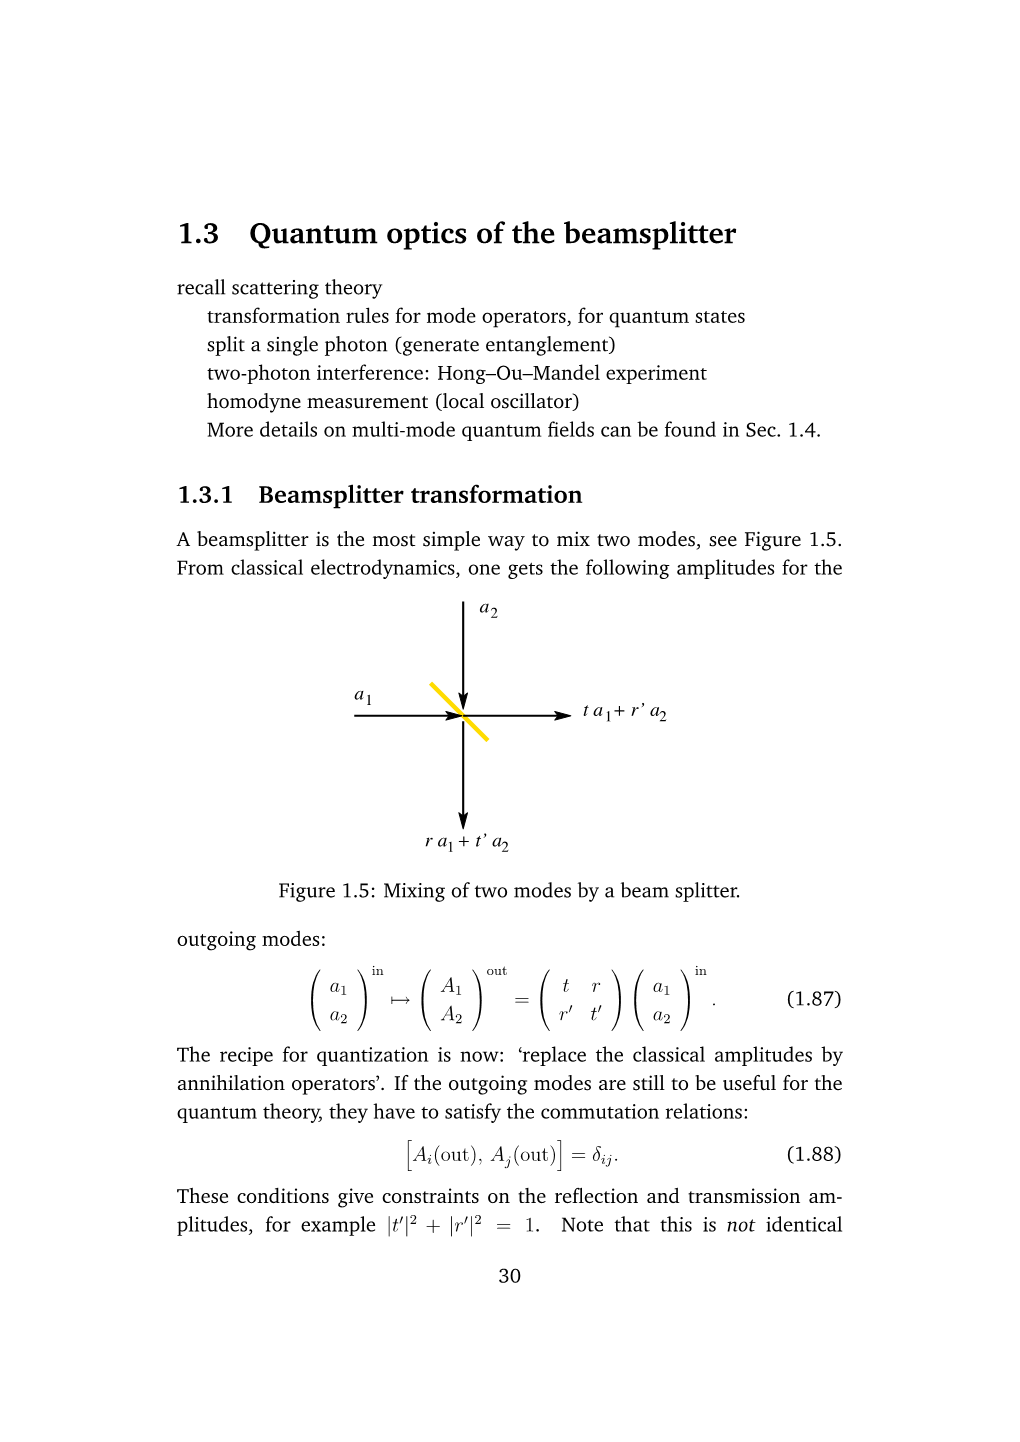 1.3 Quantum Optics of the Beamsplitter